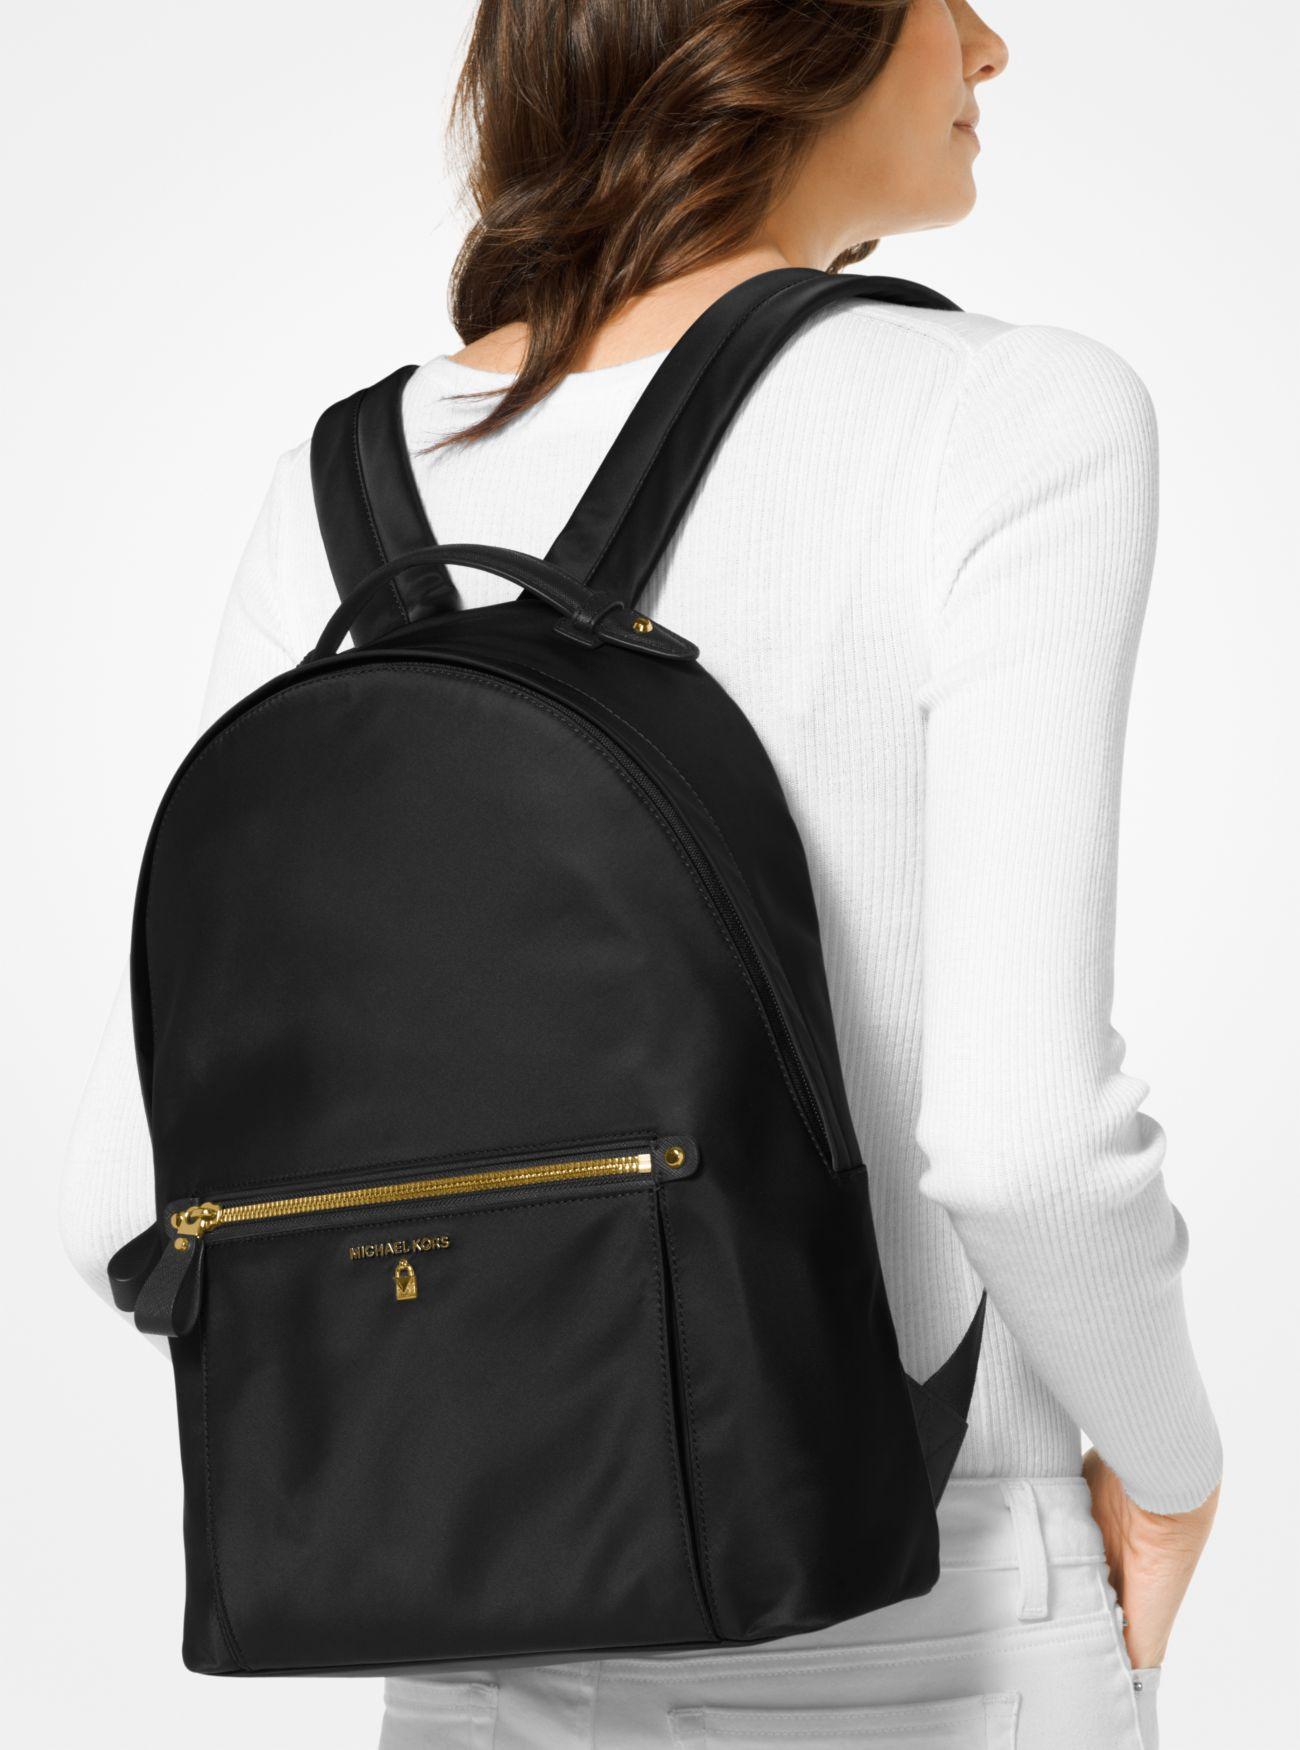 michael kors backpack black